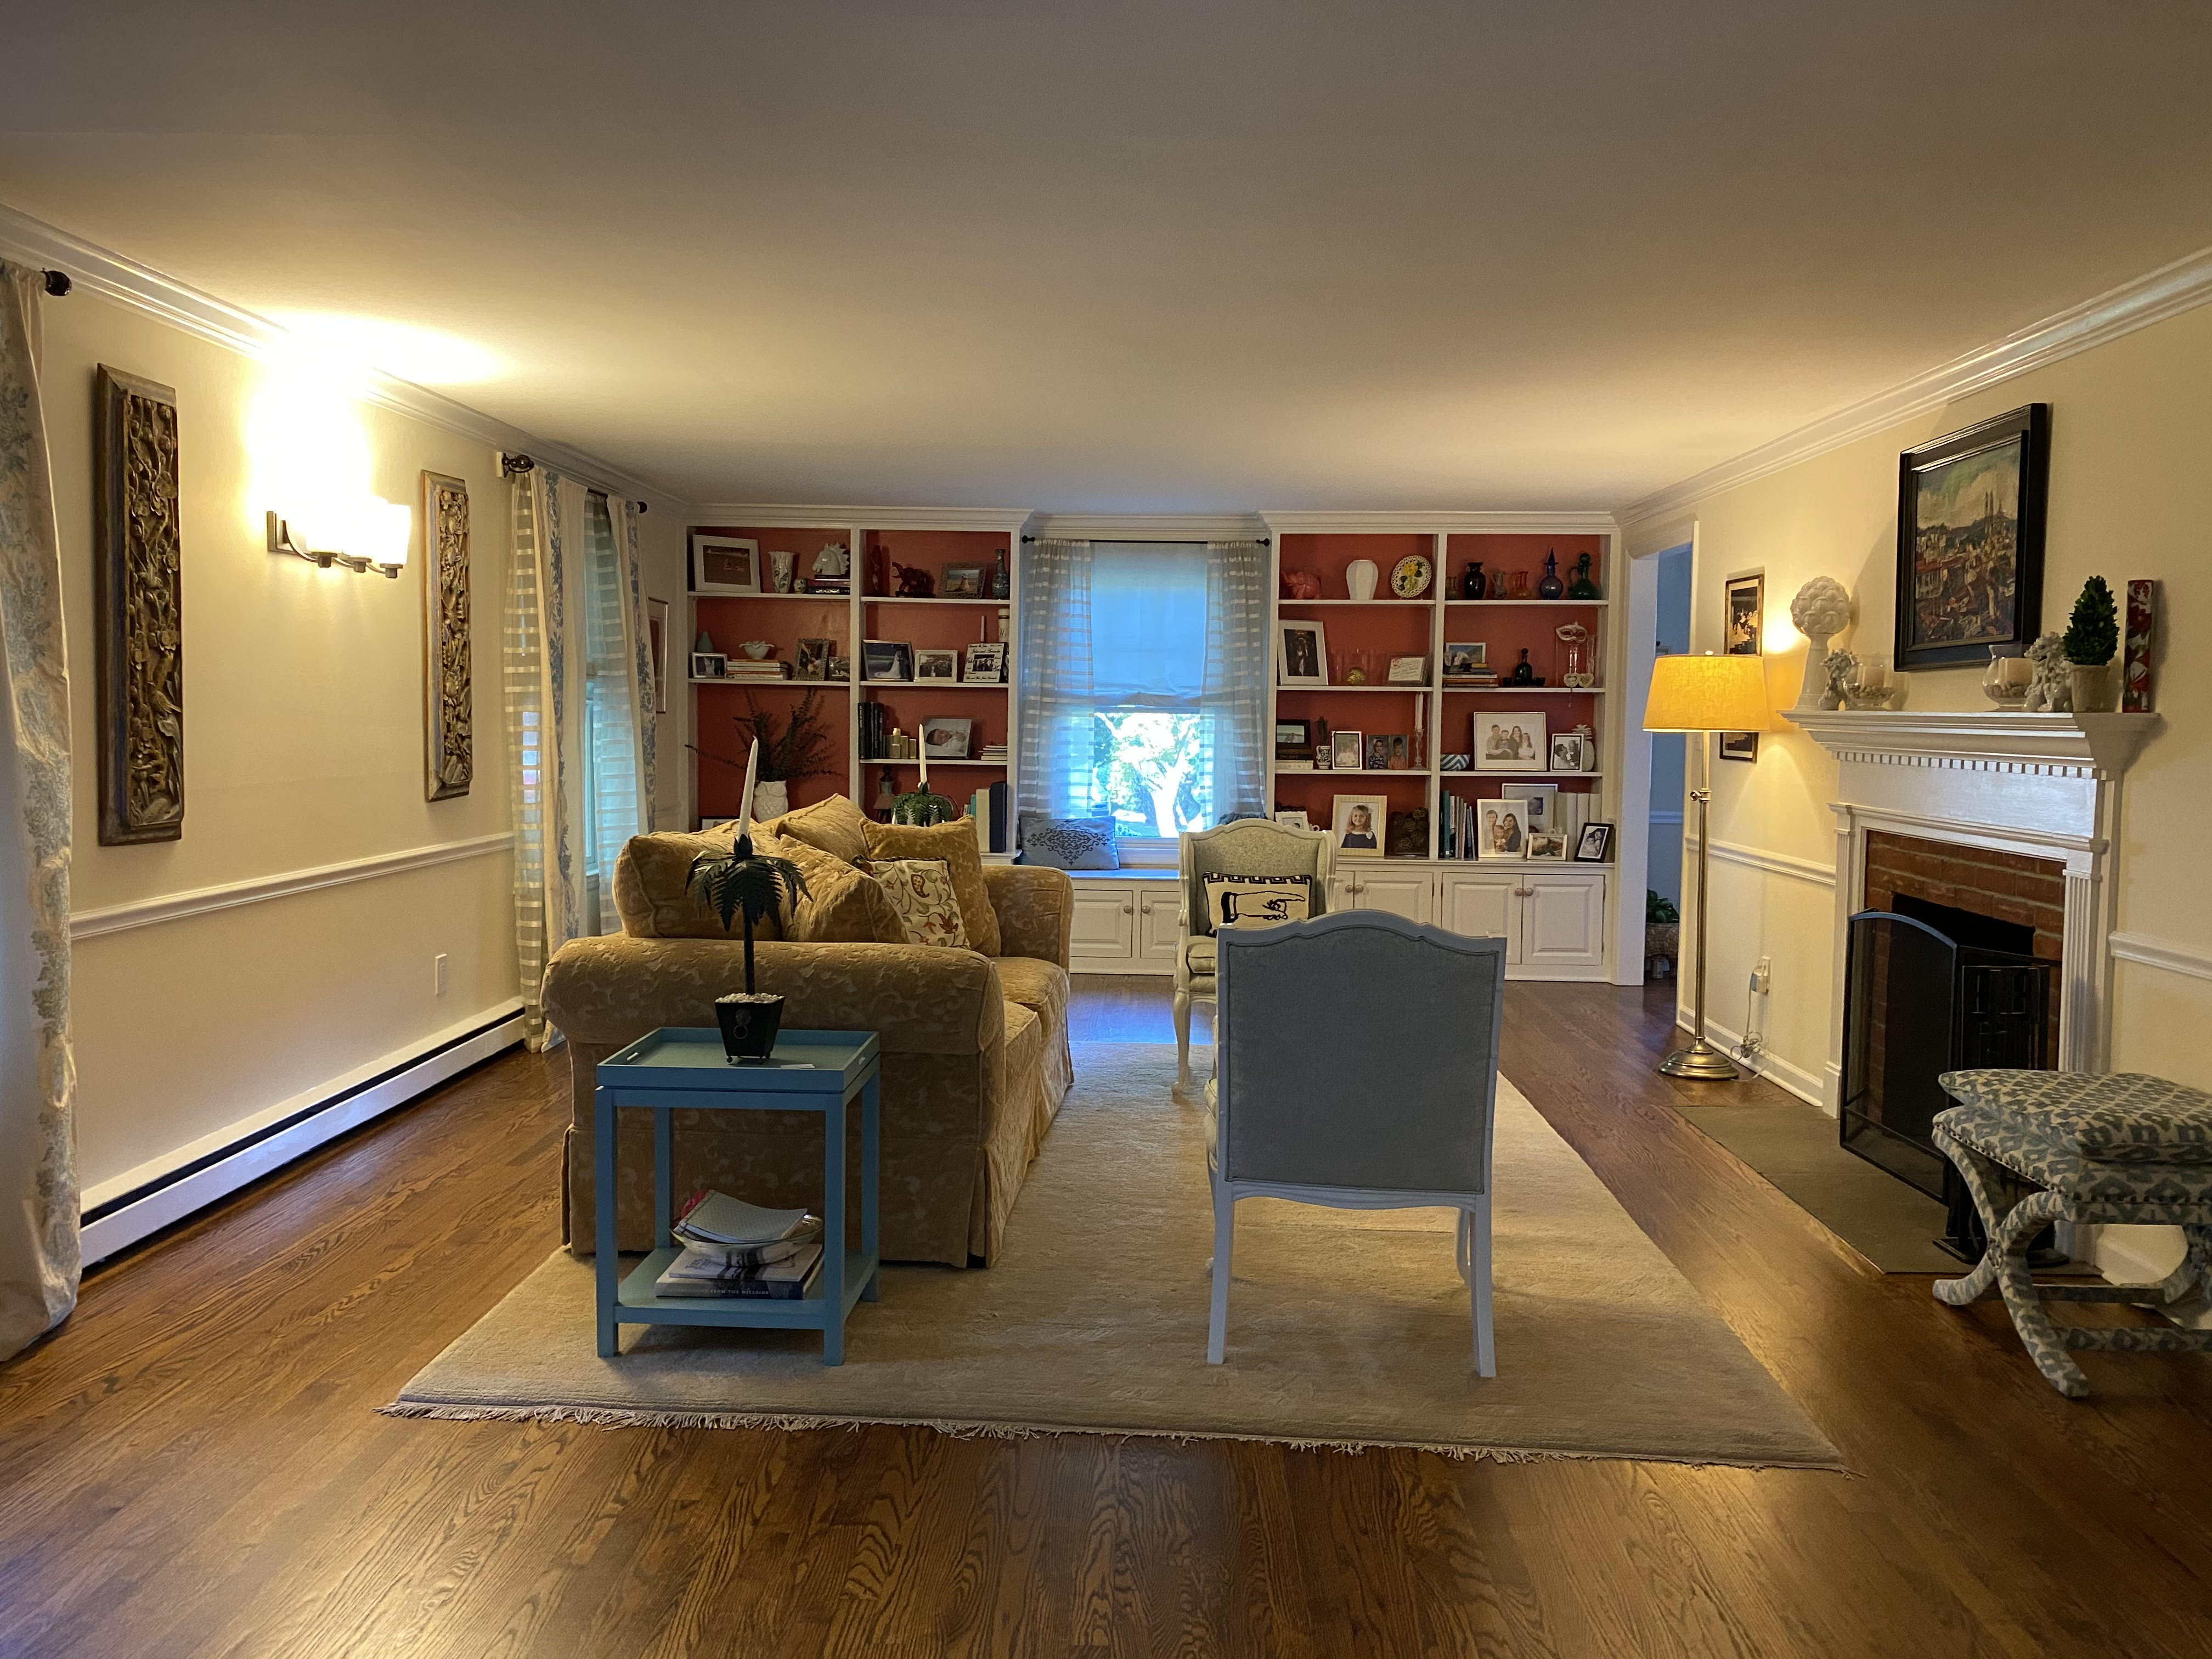 15 Long But Narrow Living Room Design Ideas